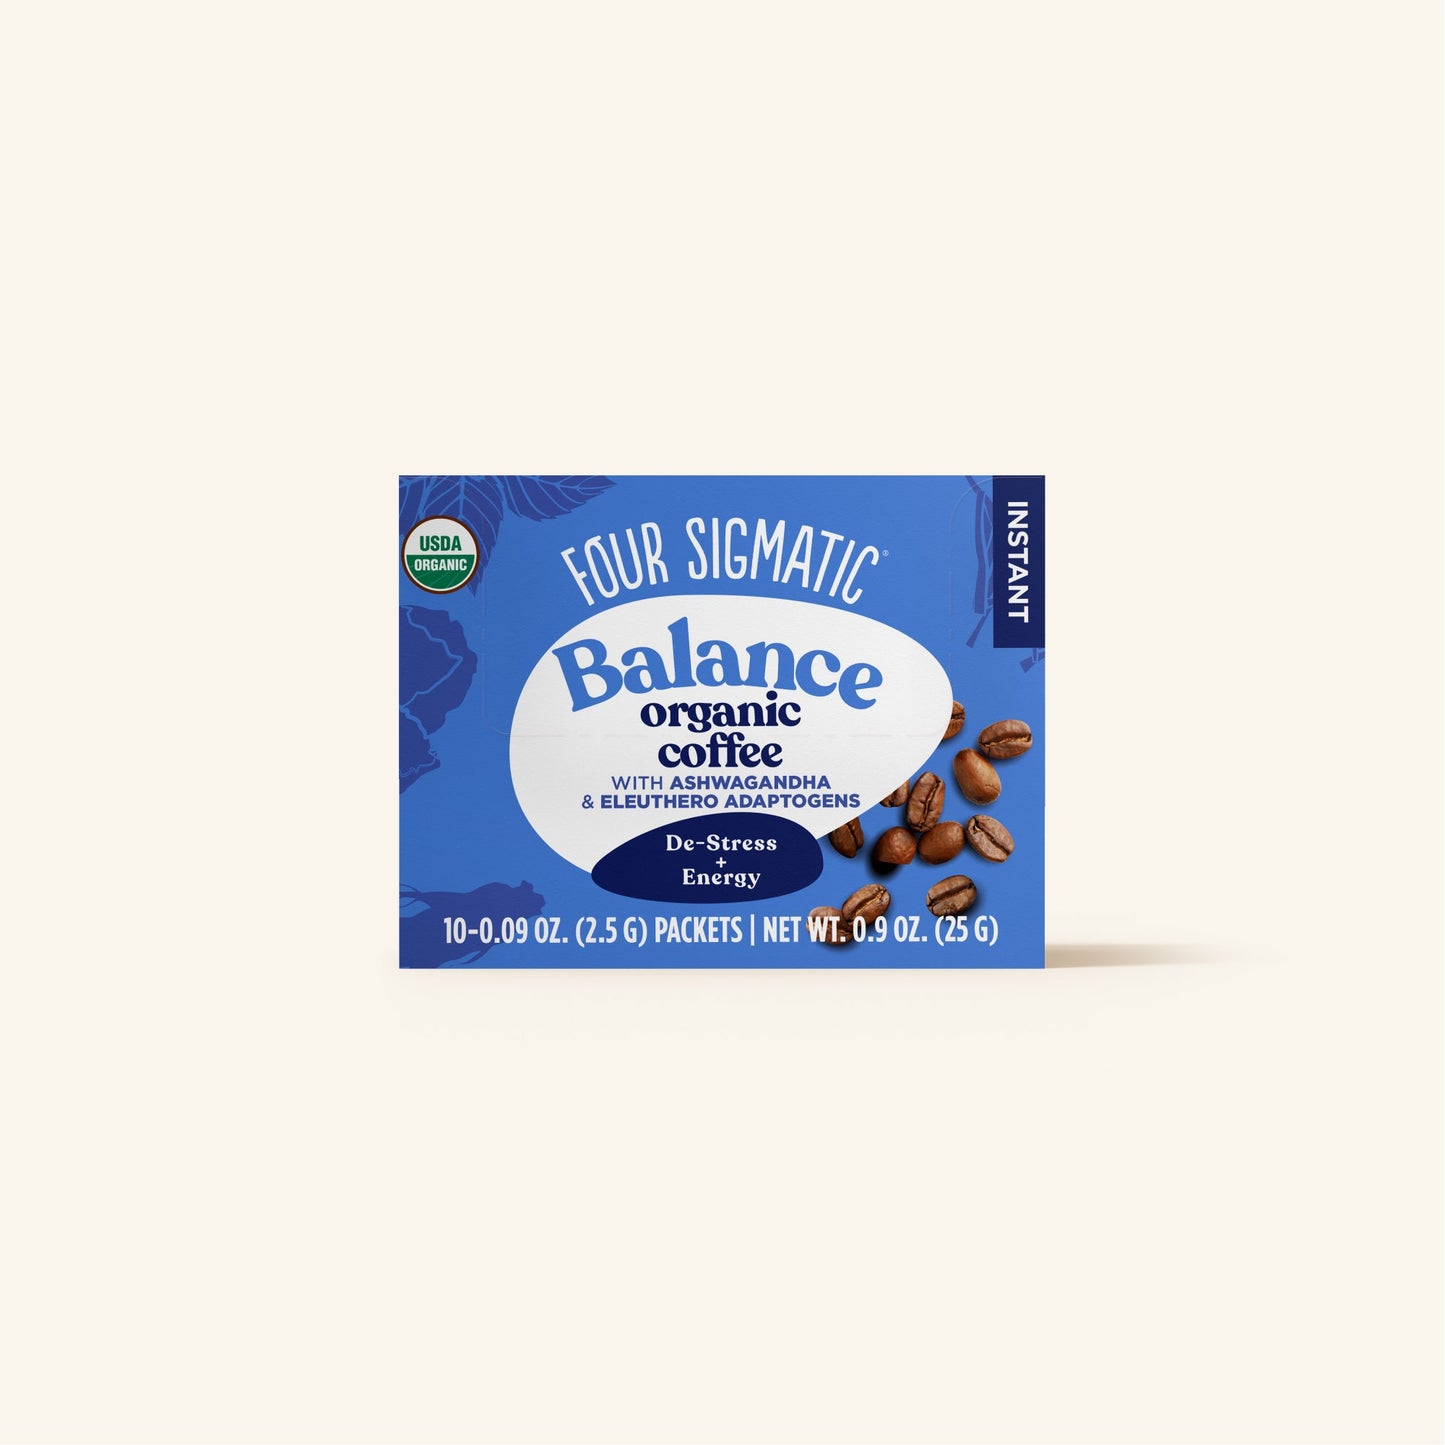 Balance Instant Coffee Box 1-Pack